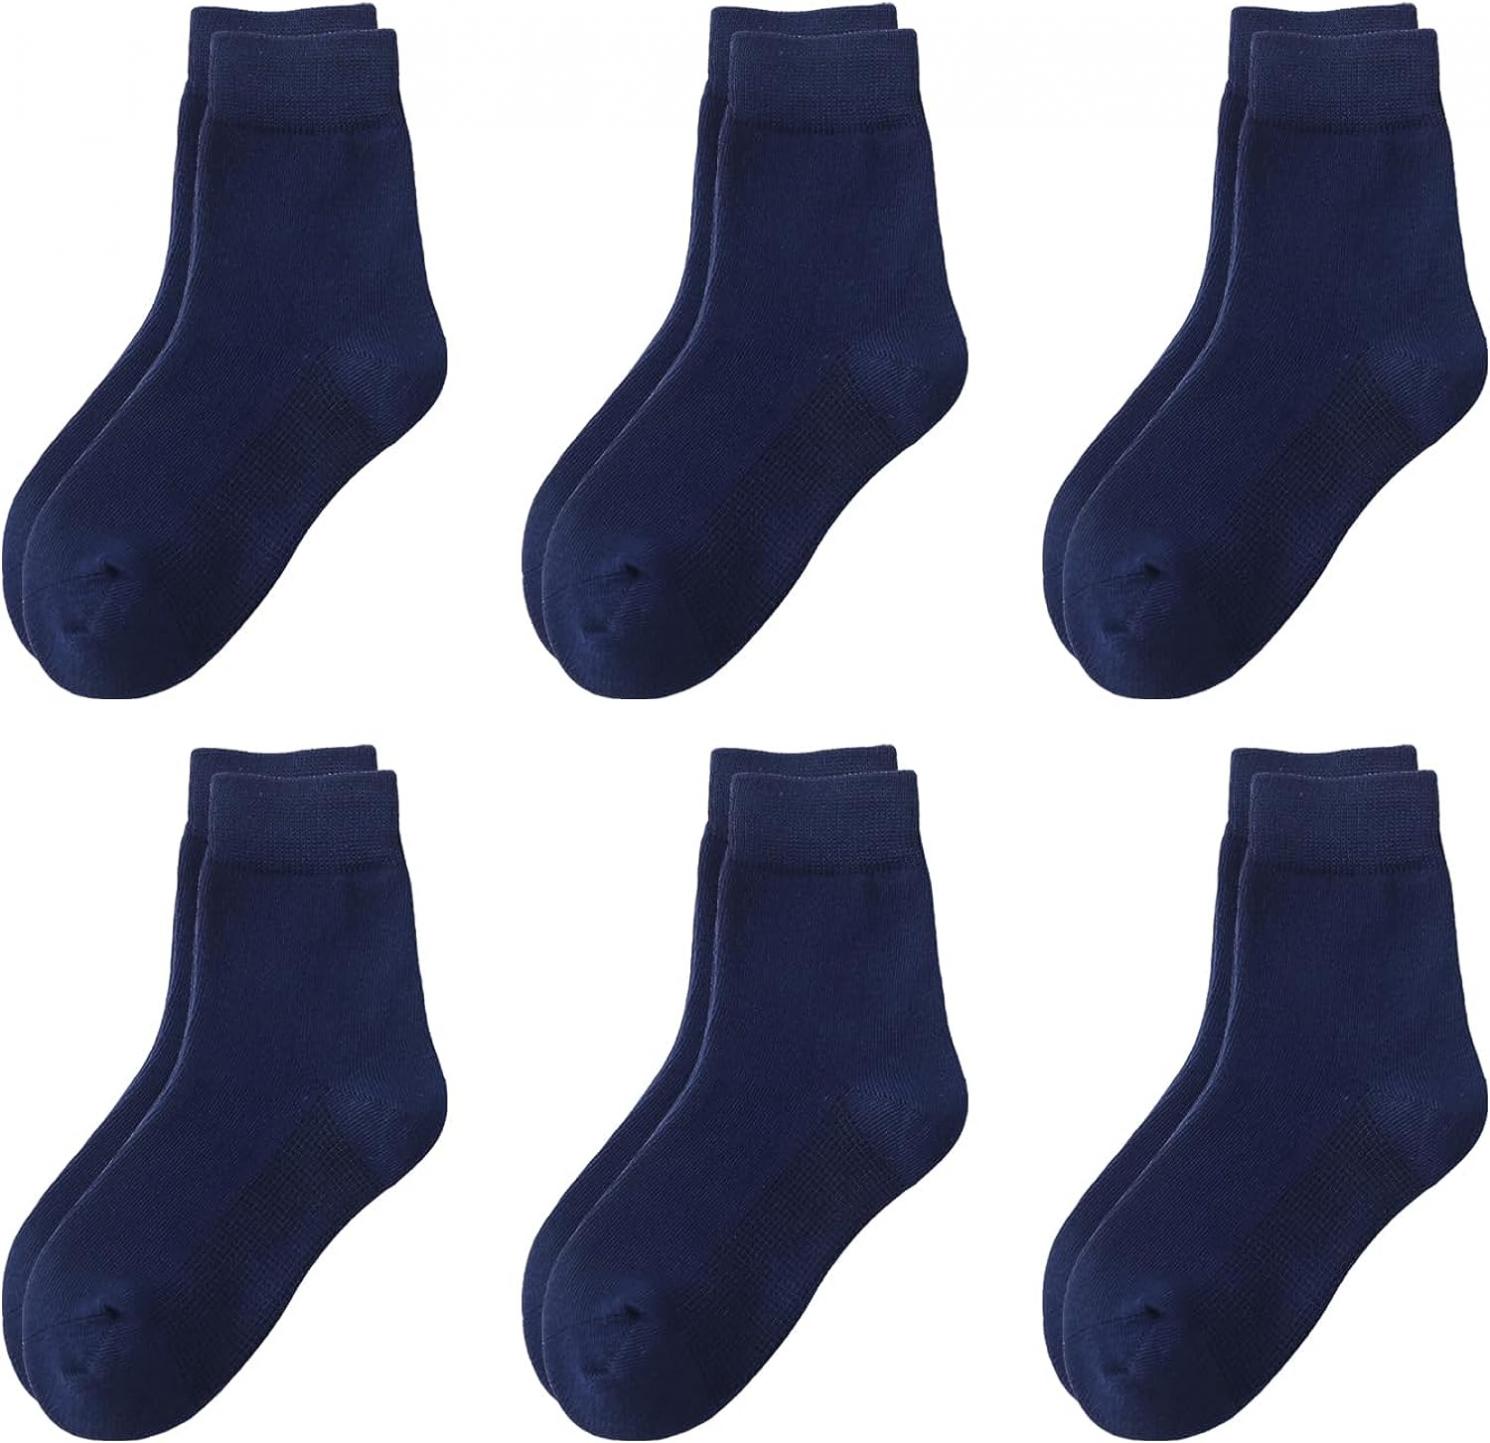 hakugoo Boys Crew Socks 6 Pairs Seamless Cotton Socks Dress Socks School Uniform Socks for Girls Youth Kids Toddler